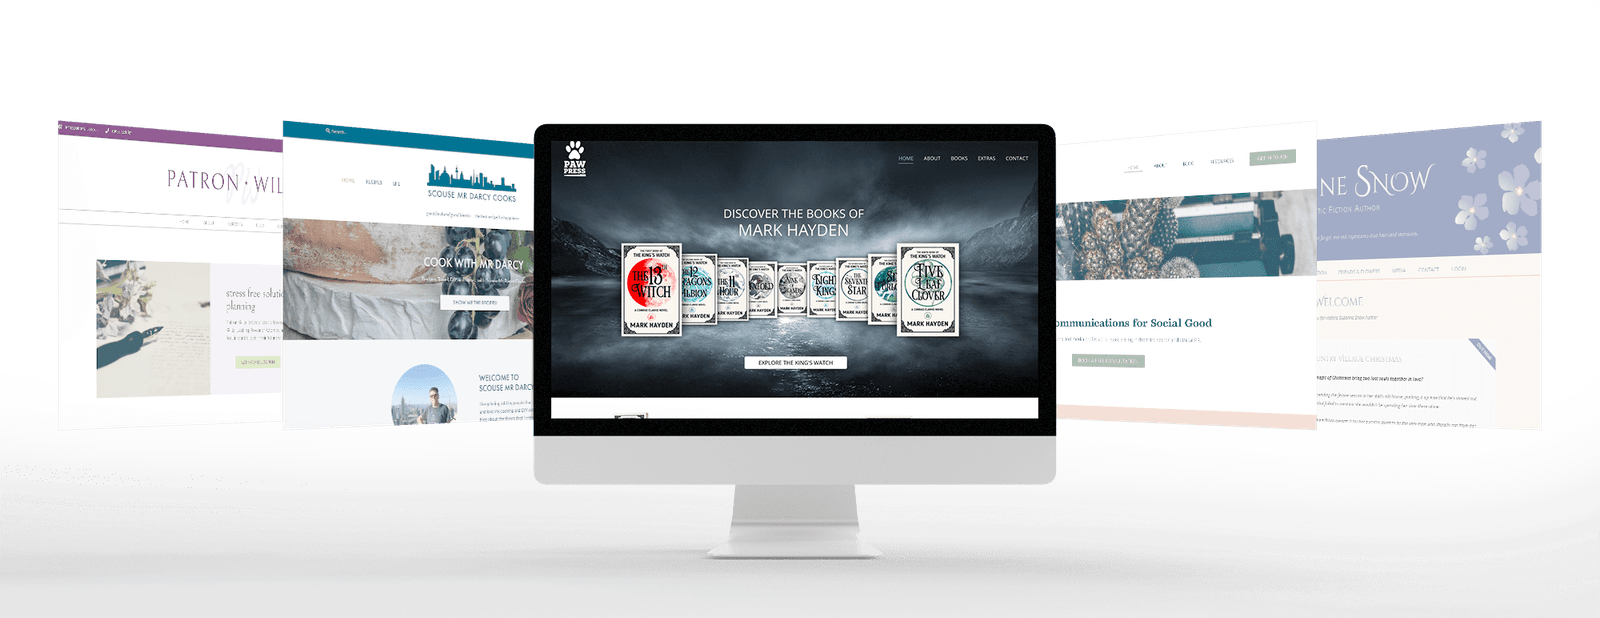 website design services, katie birks branding & design